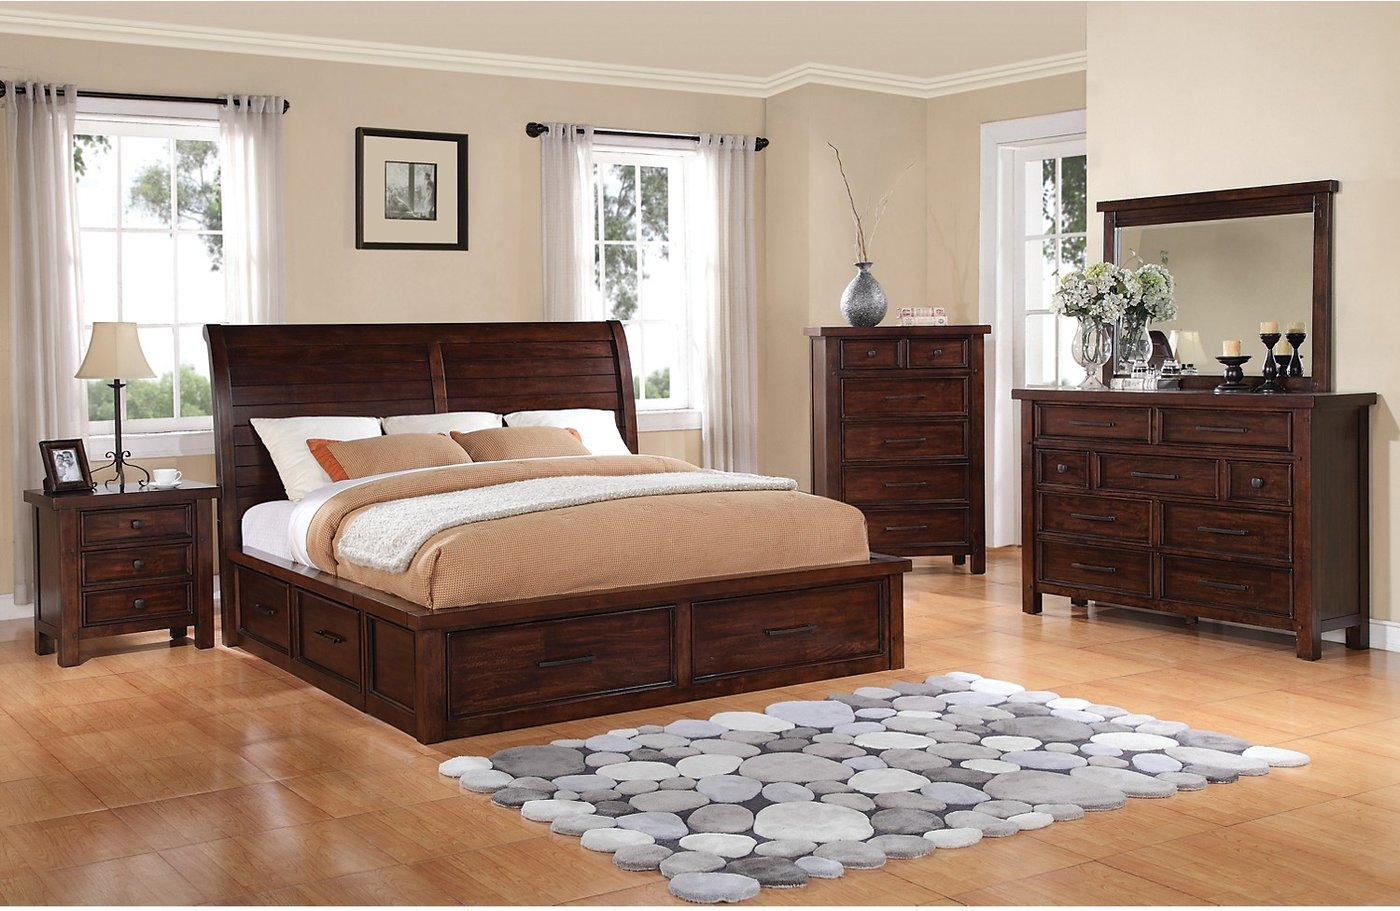 sonoma valley bedroom furniture